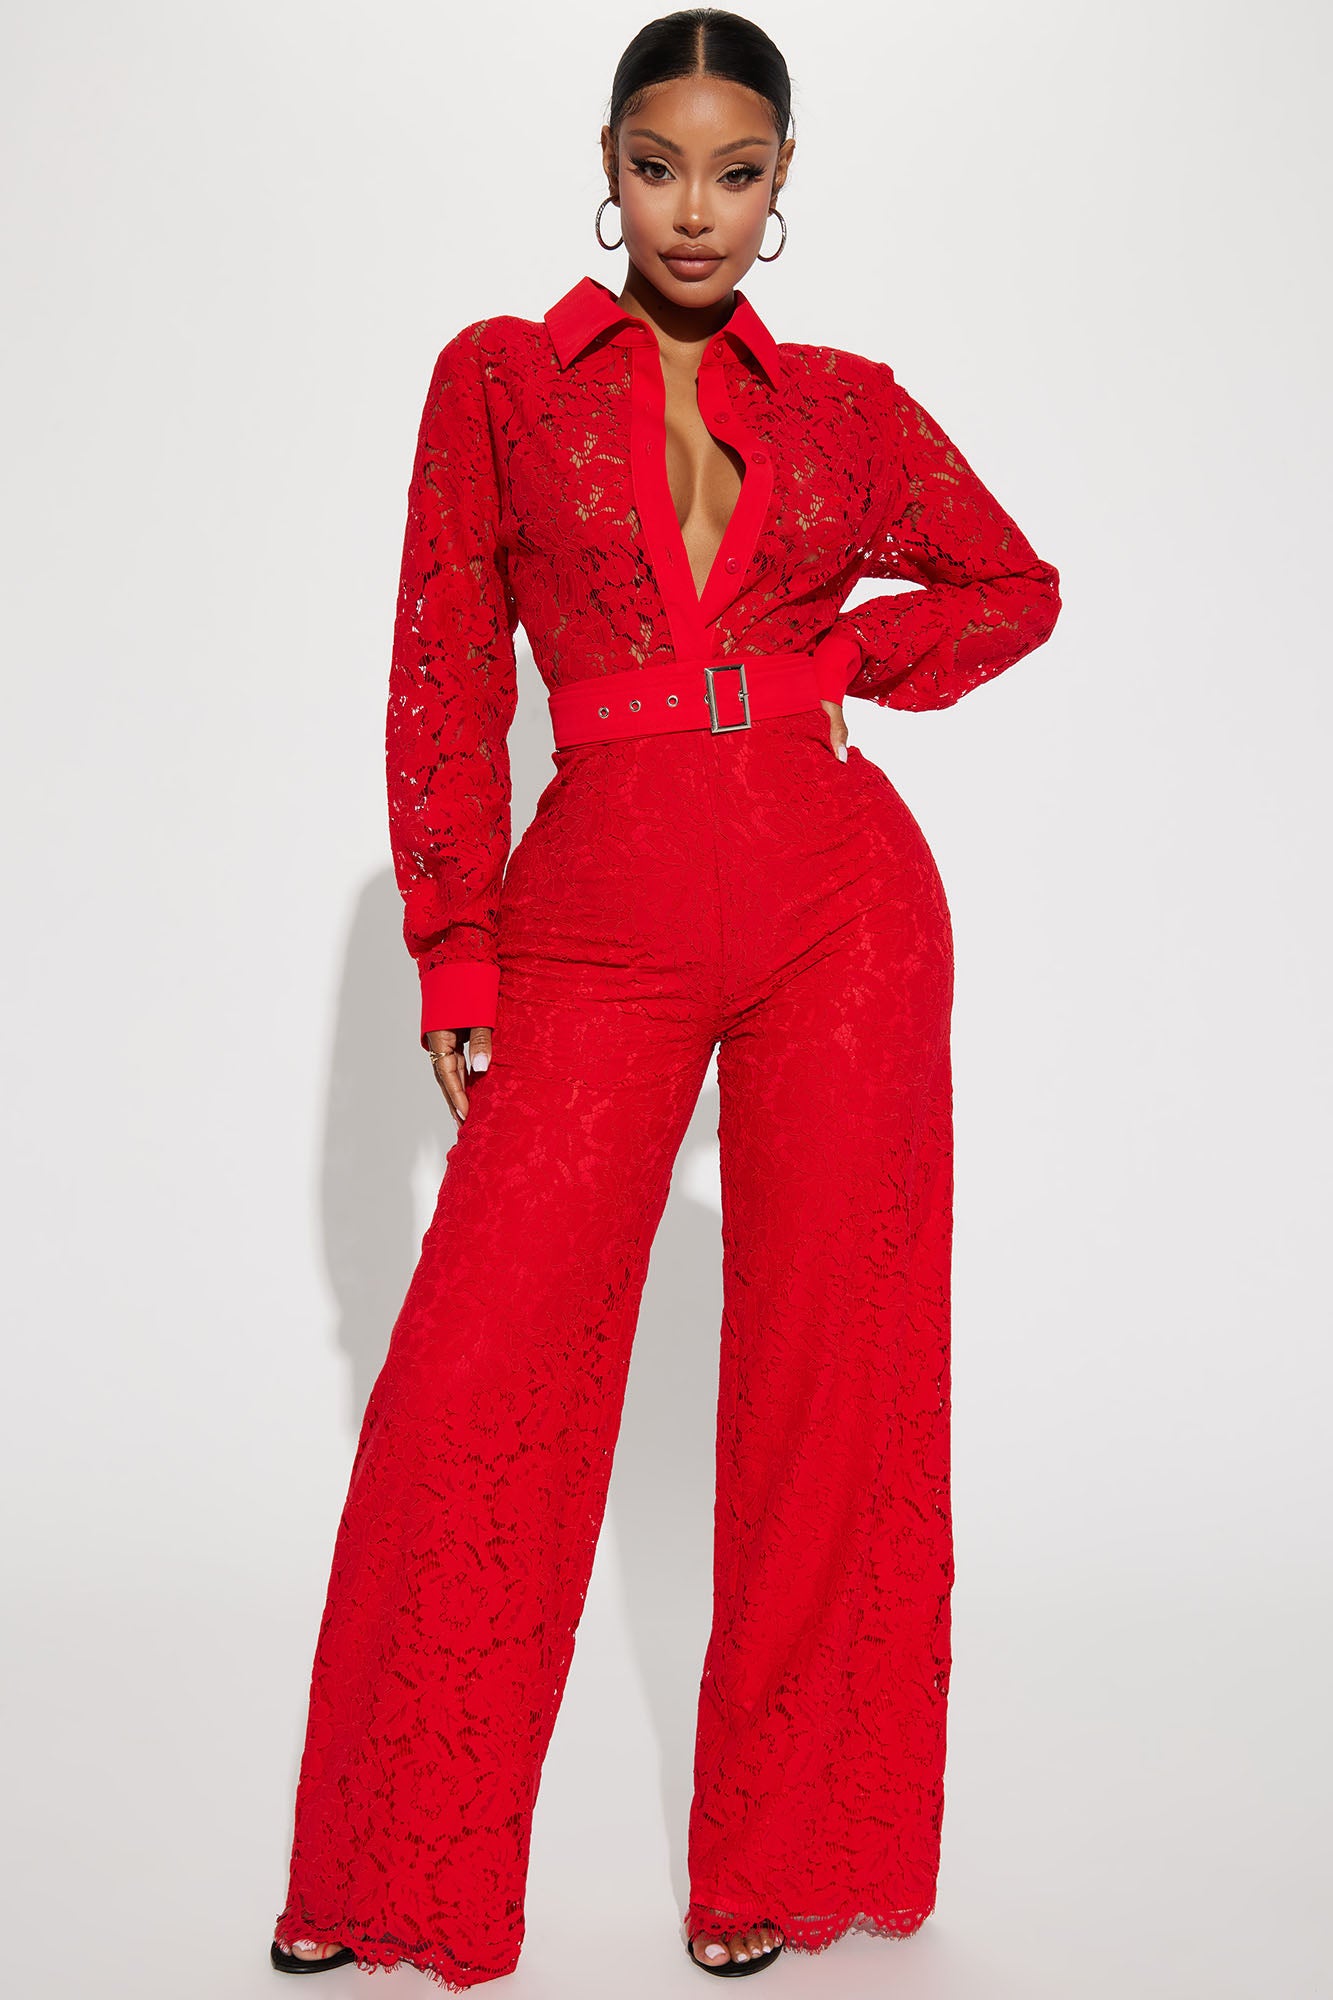 Perfect Night Lace Jumpsuit - Red, Fashion Nova, Jumpsuits